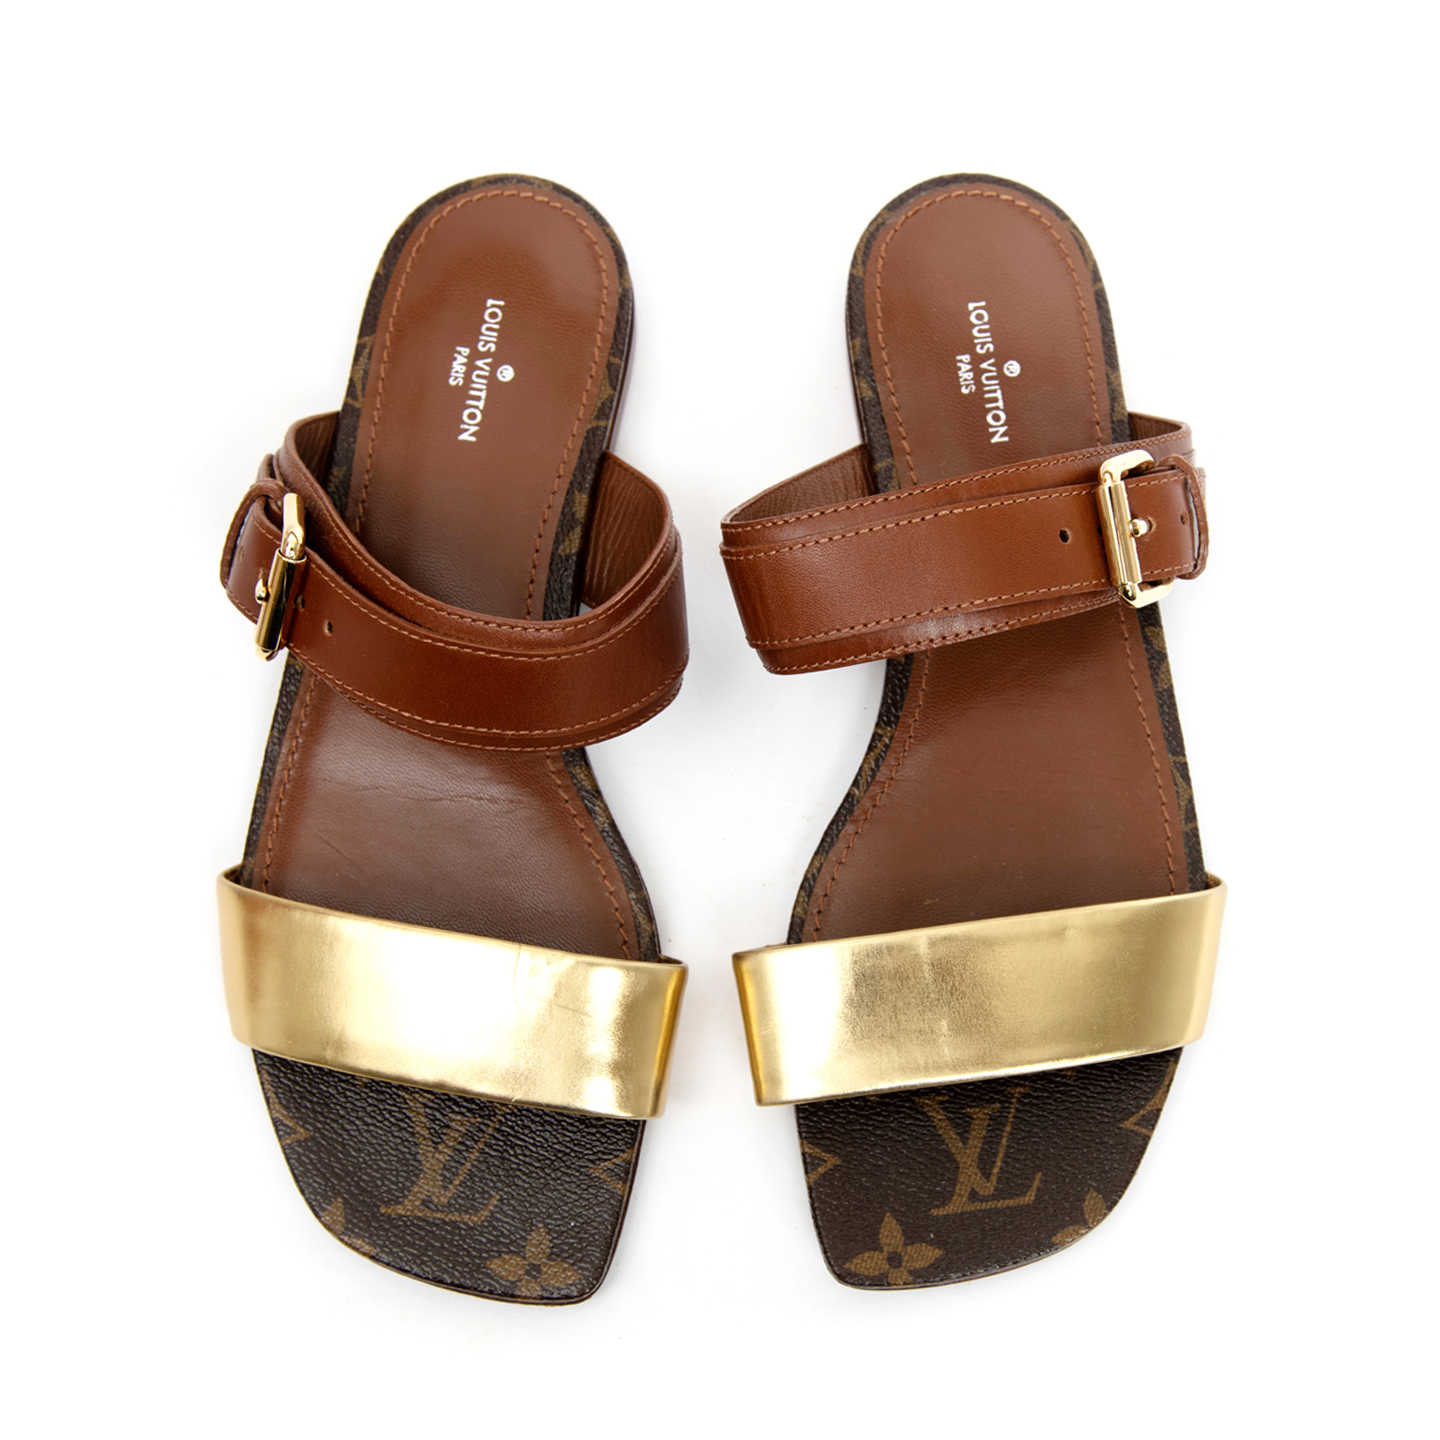  Louis  Vuitton  Golden Bloom Flat Sandals  Size 37 5 